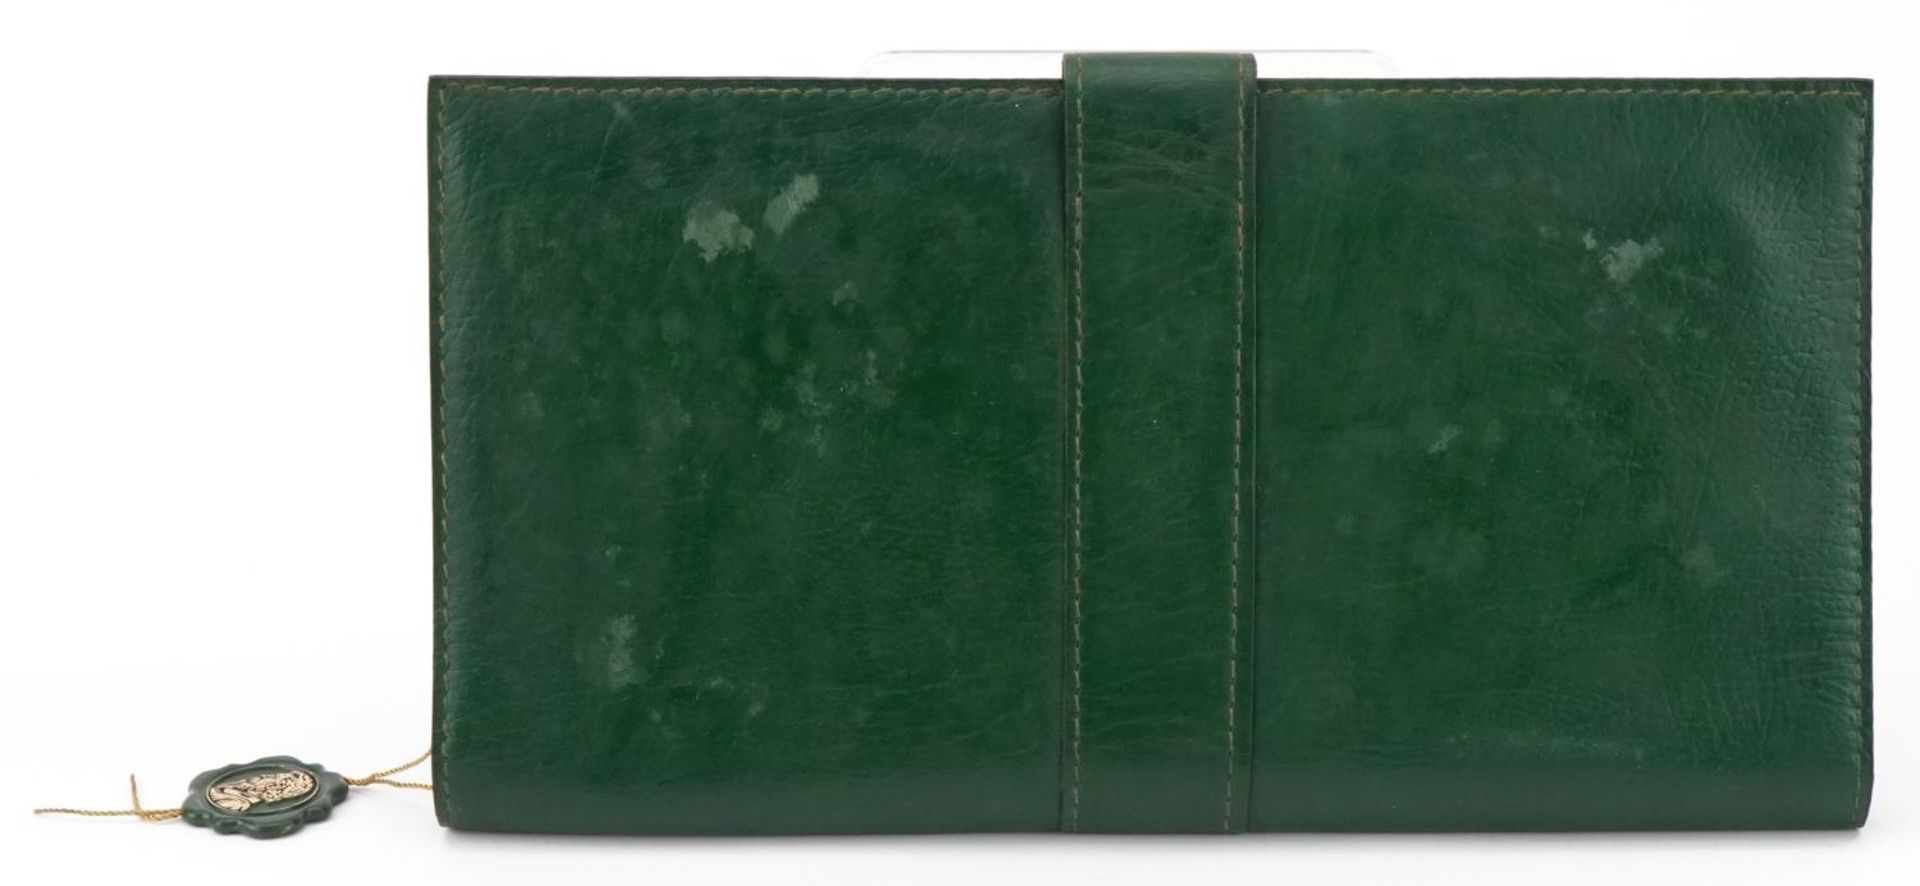 Rolex Cellini green leather wristwatch case with box and paperwork - Bild 5 aus 6